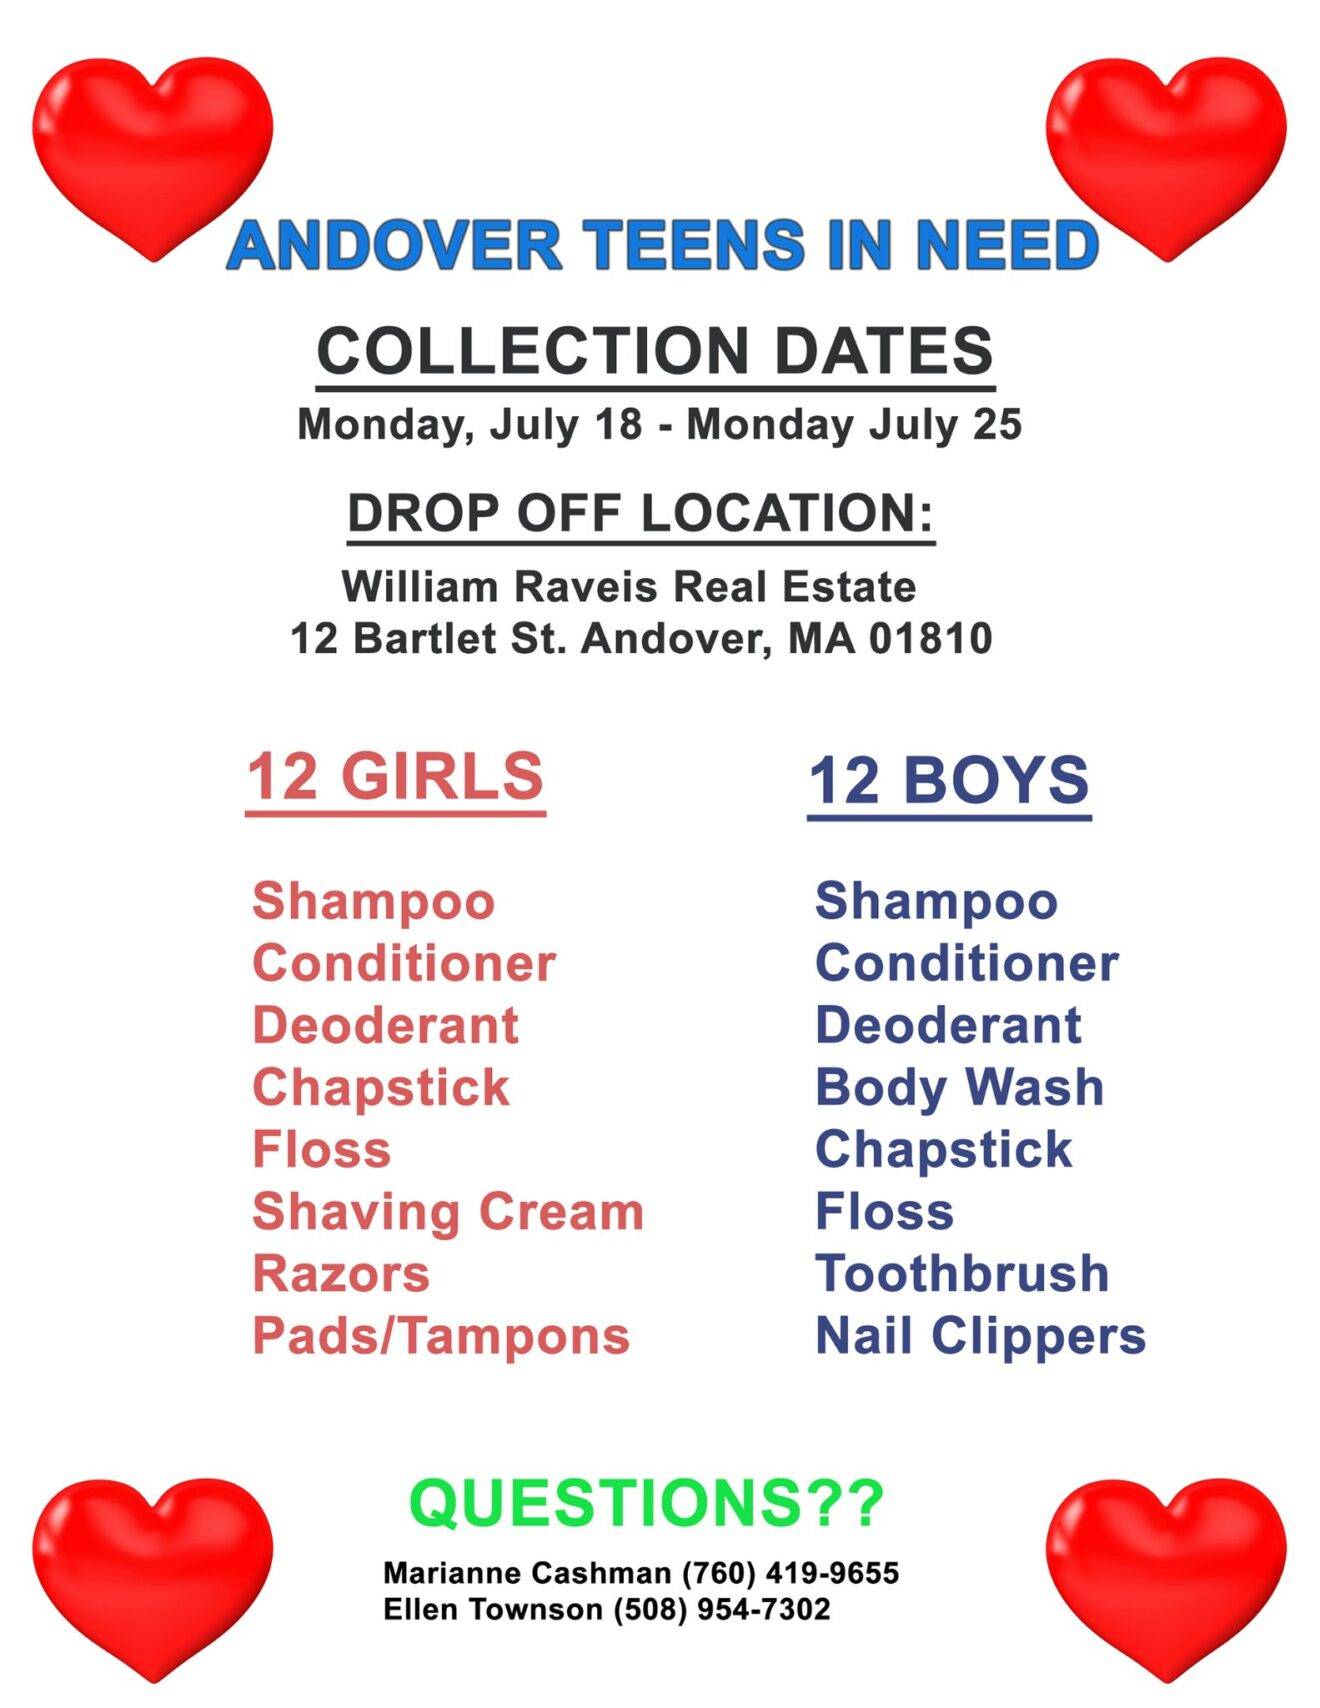 Help Andover Teens In Need